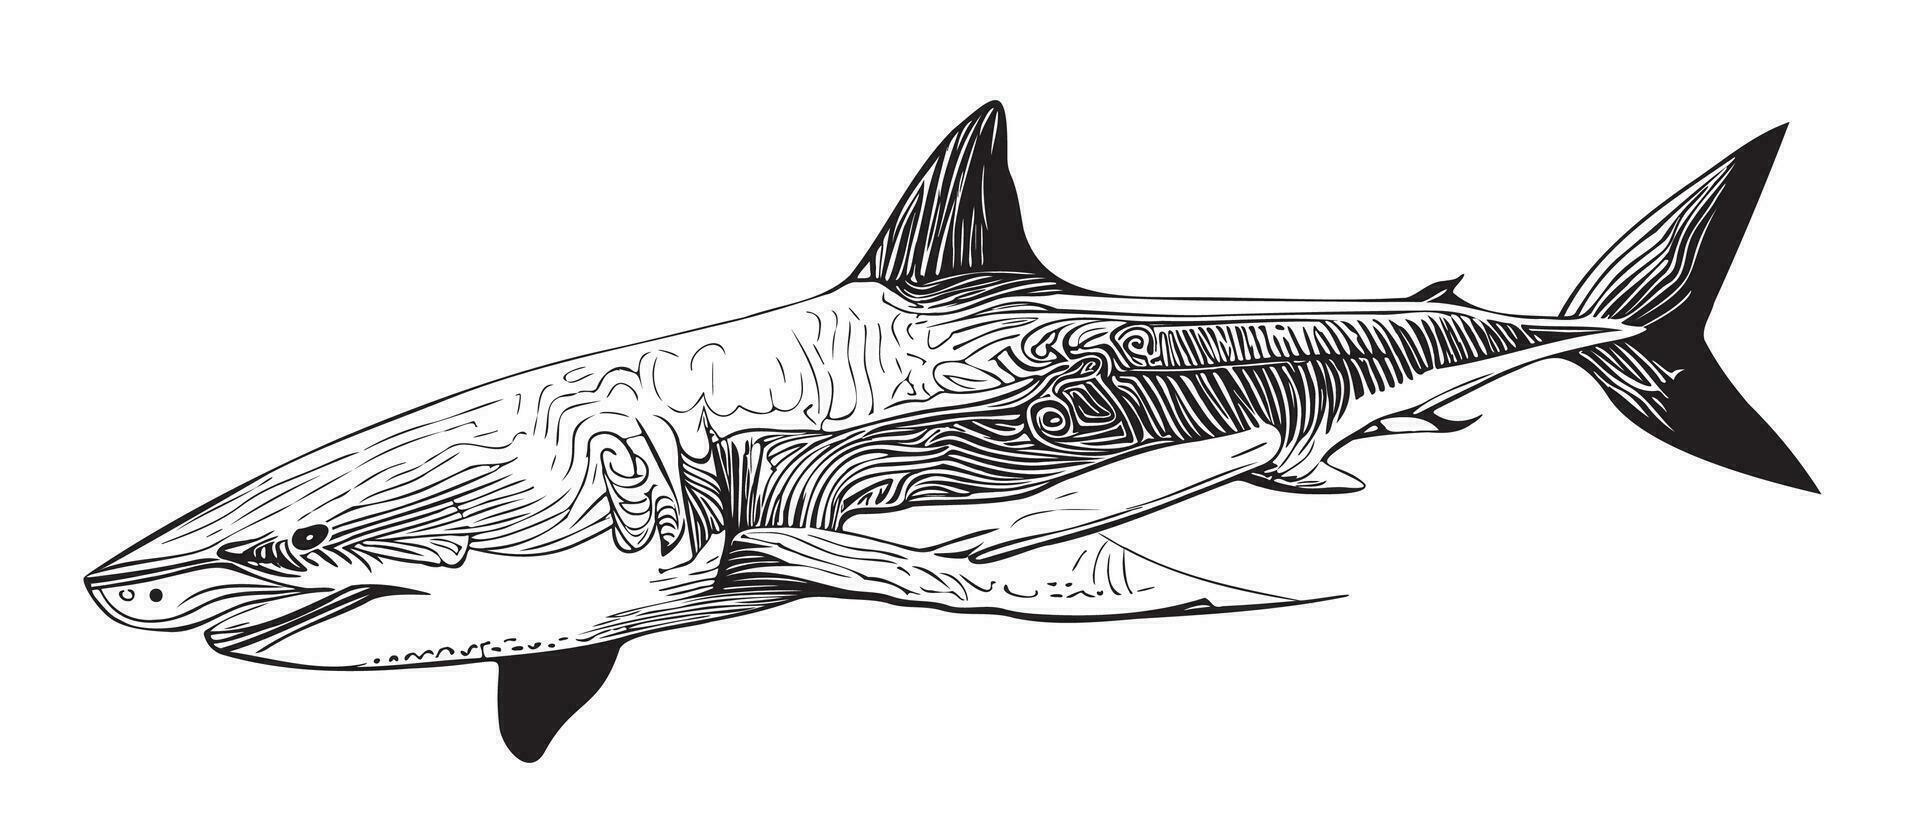 haj hand dragen skiss i klotter stil vektor illustration